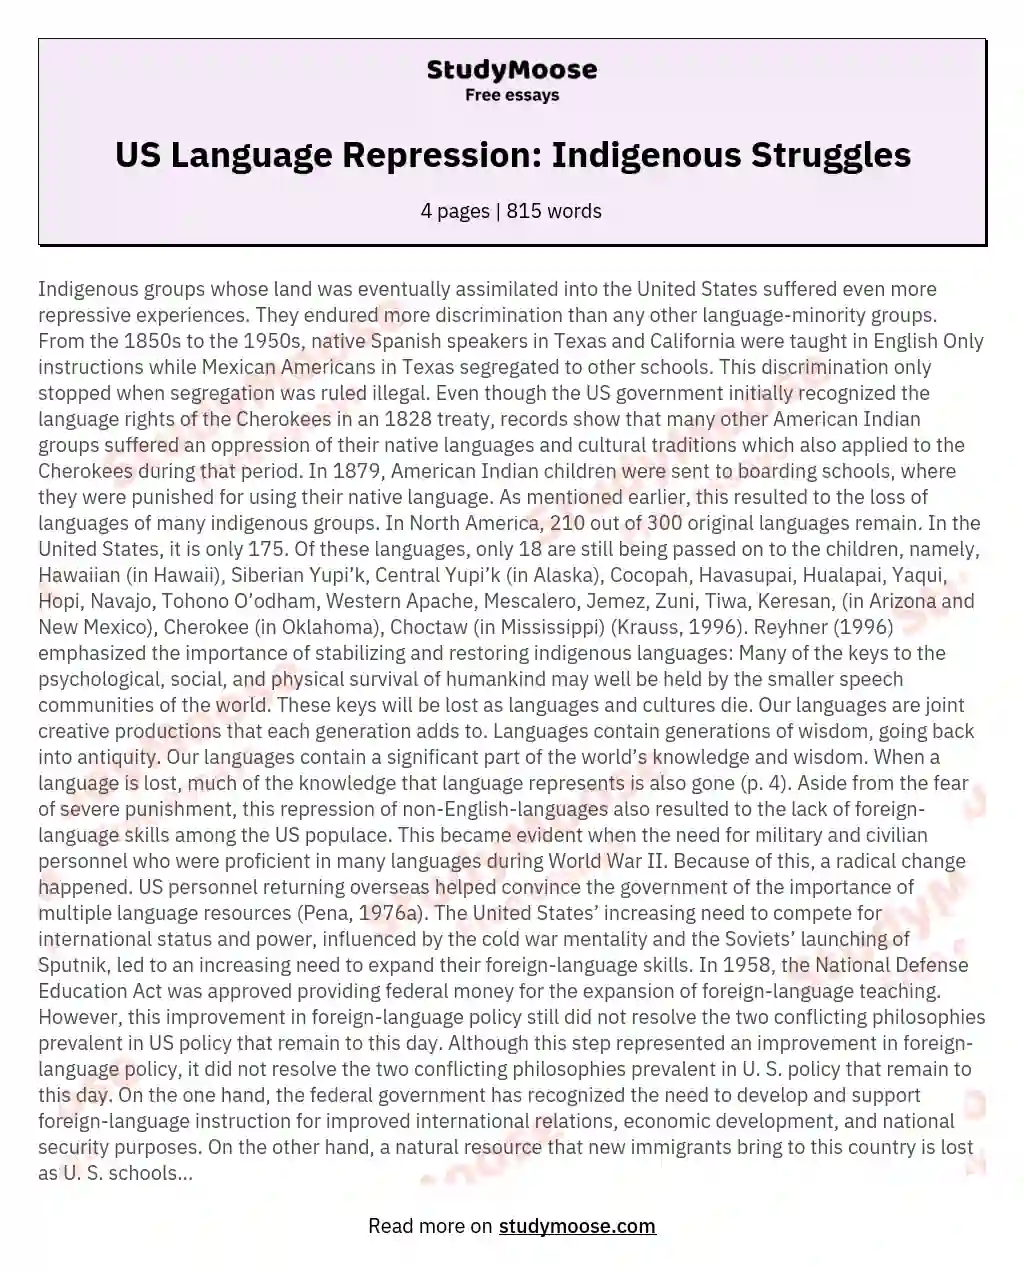 US Language Repression: Indigenous Struggles essay